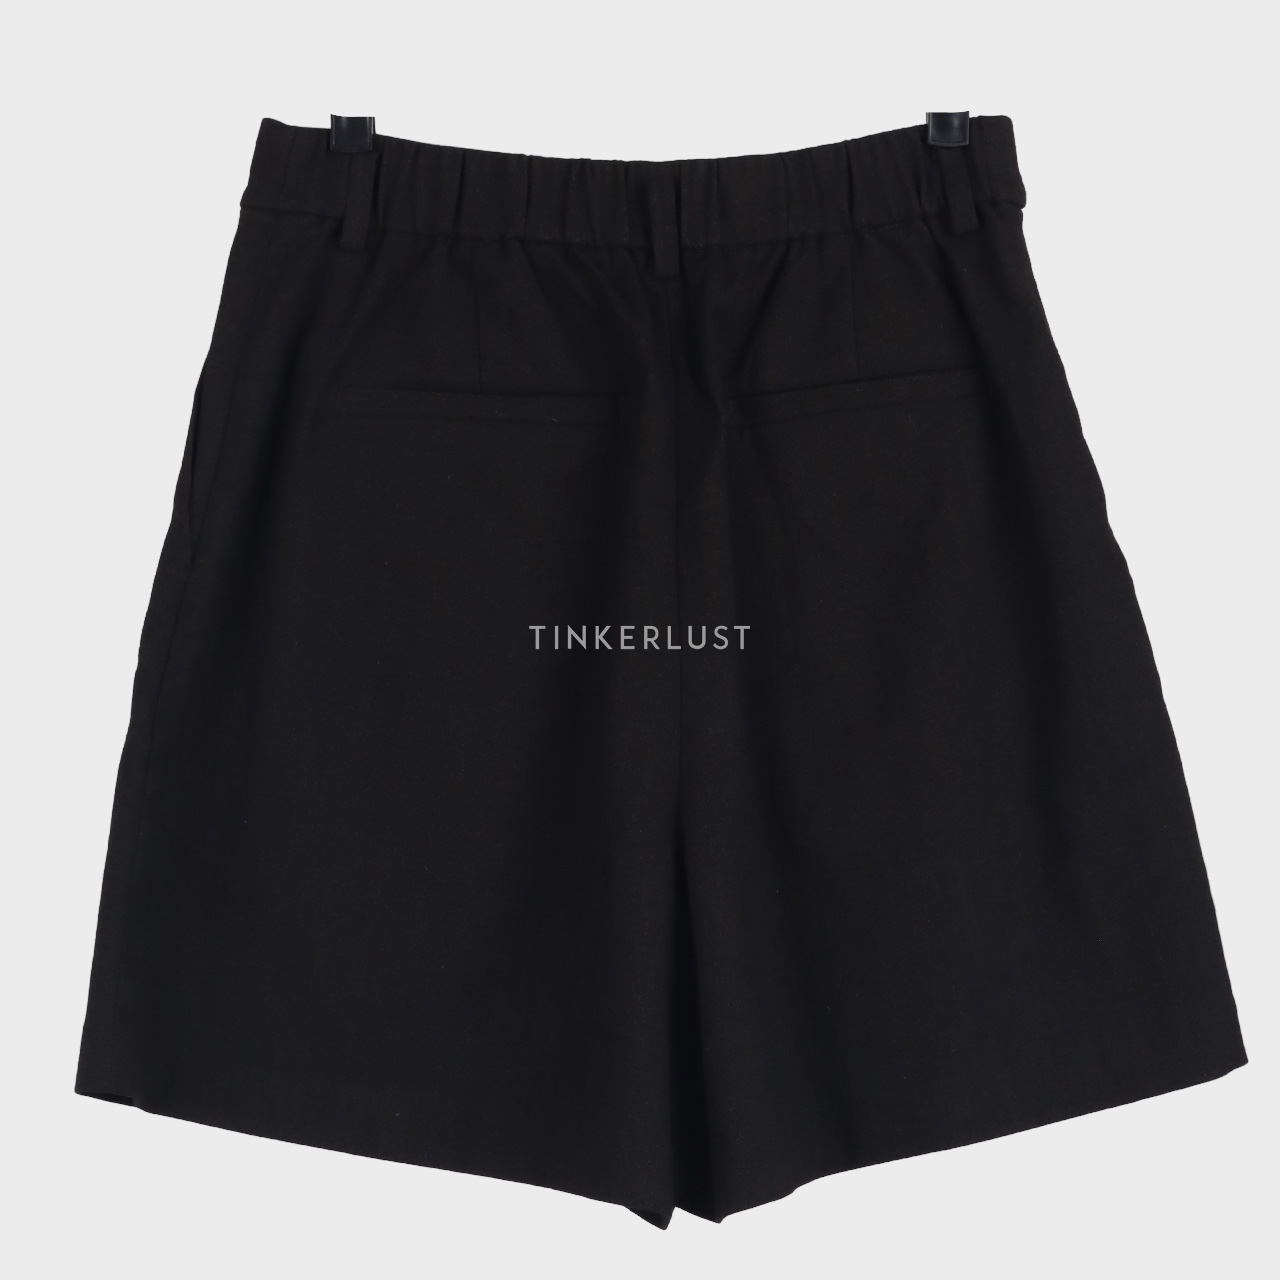 UNIQLO Black Short Pants